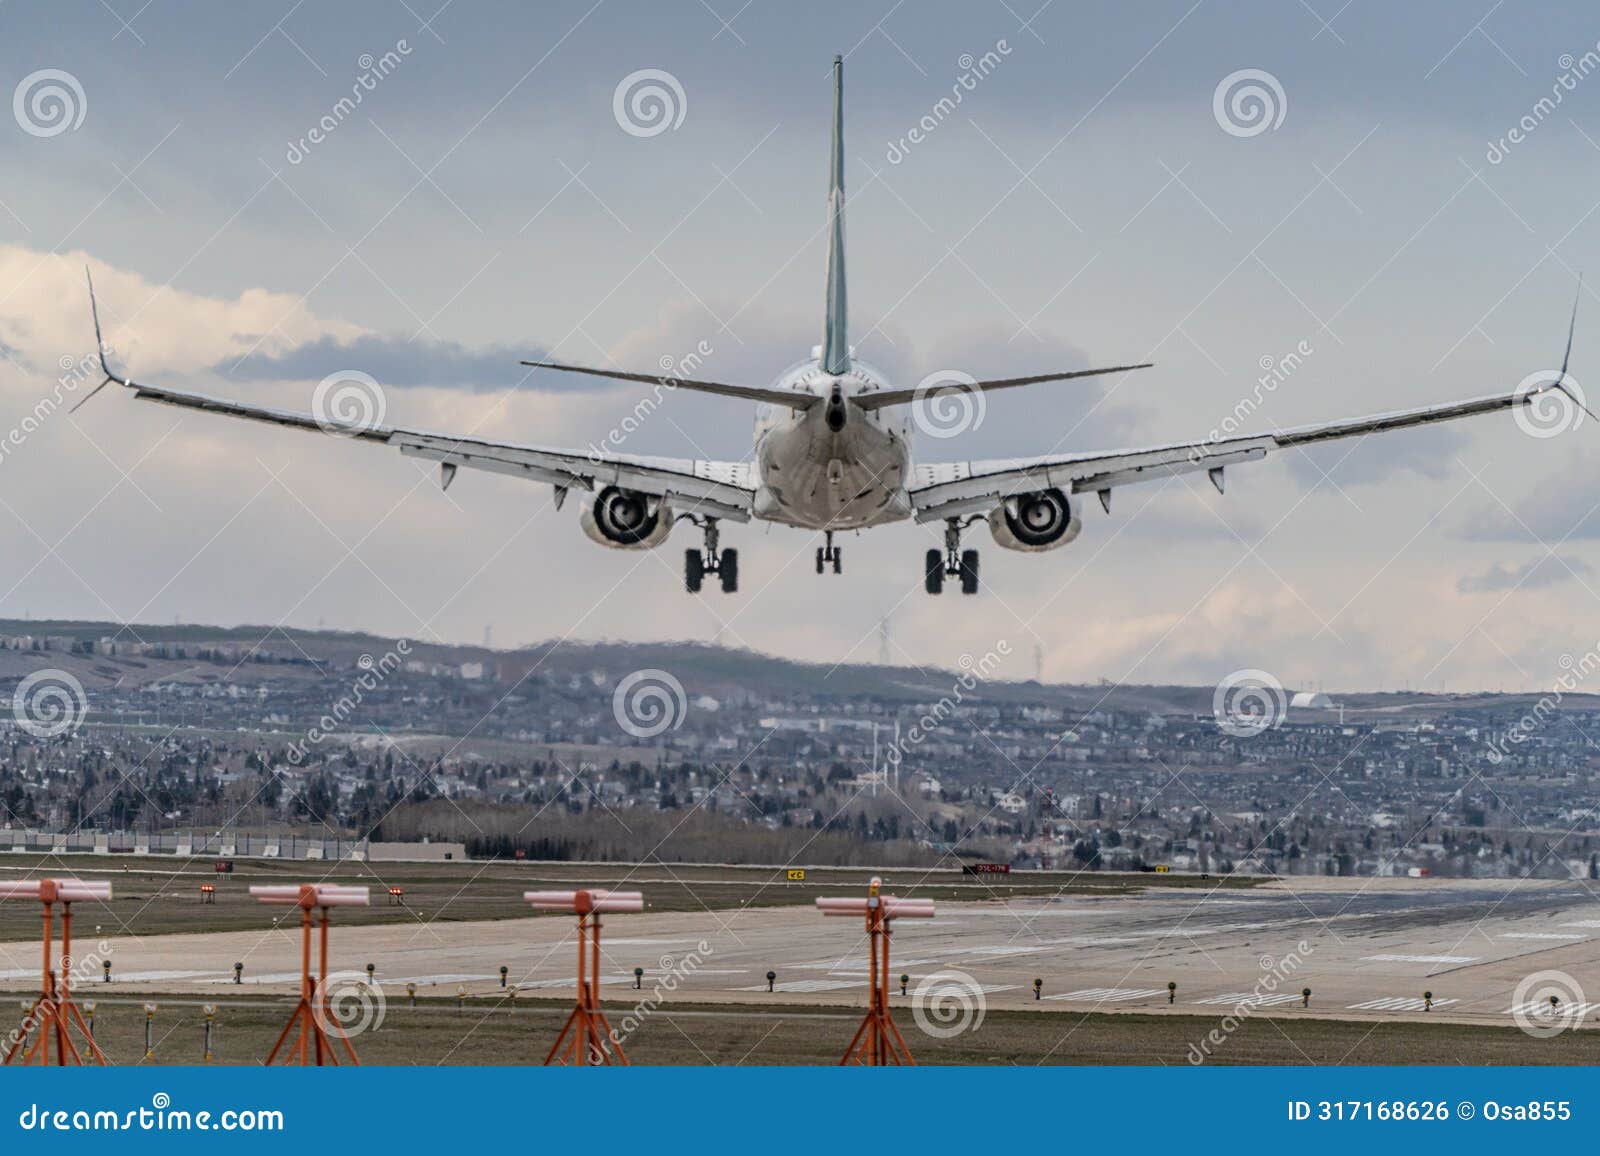 airplane jetliner arriving at airport runway